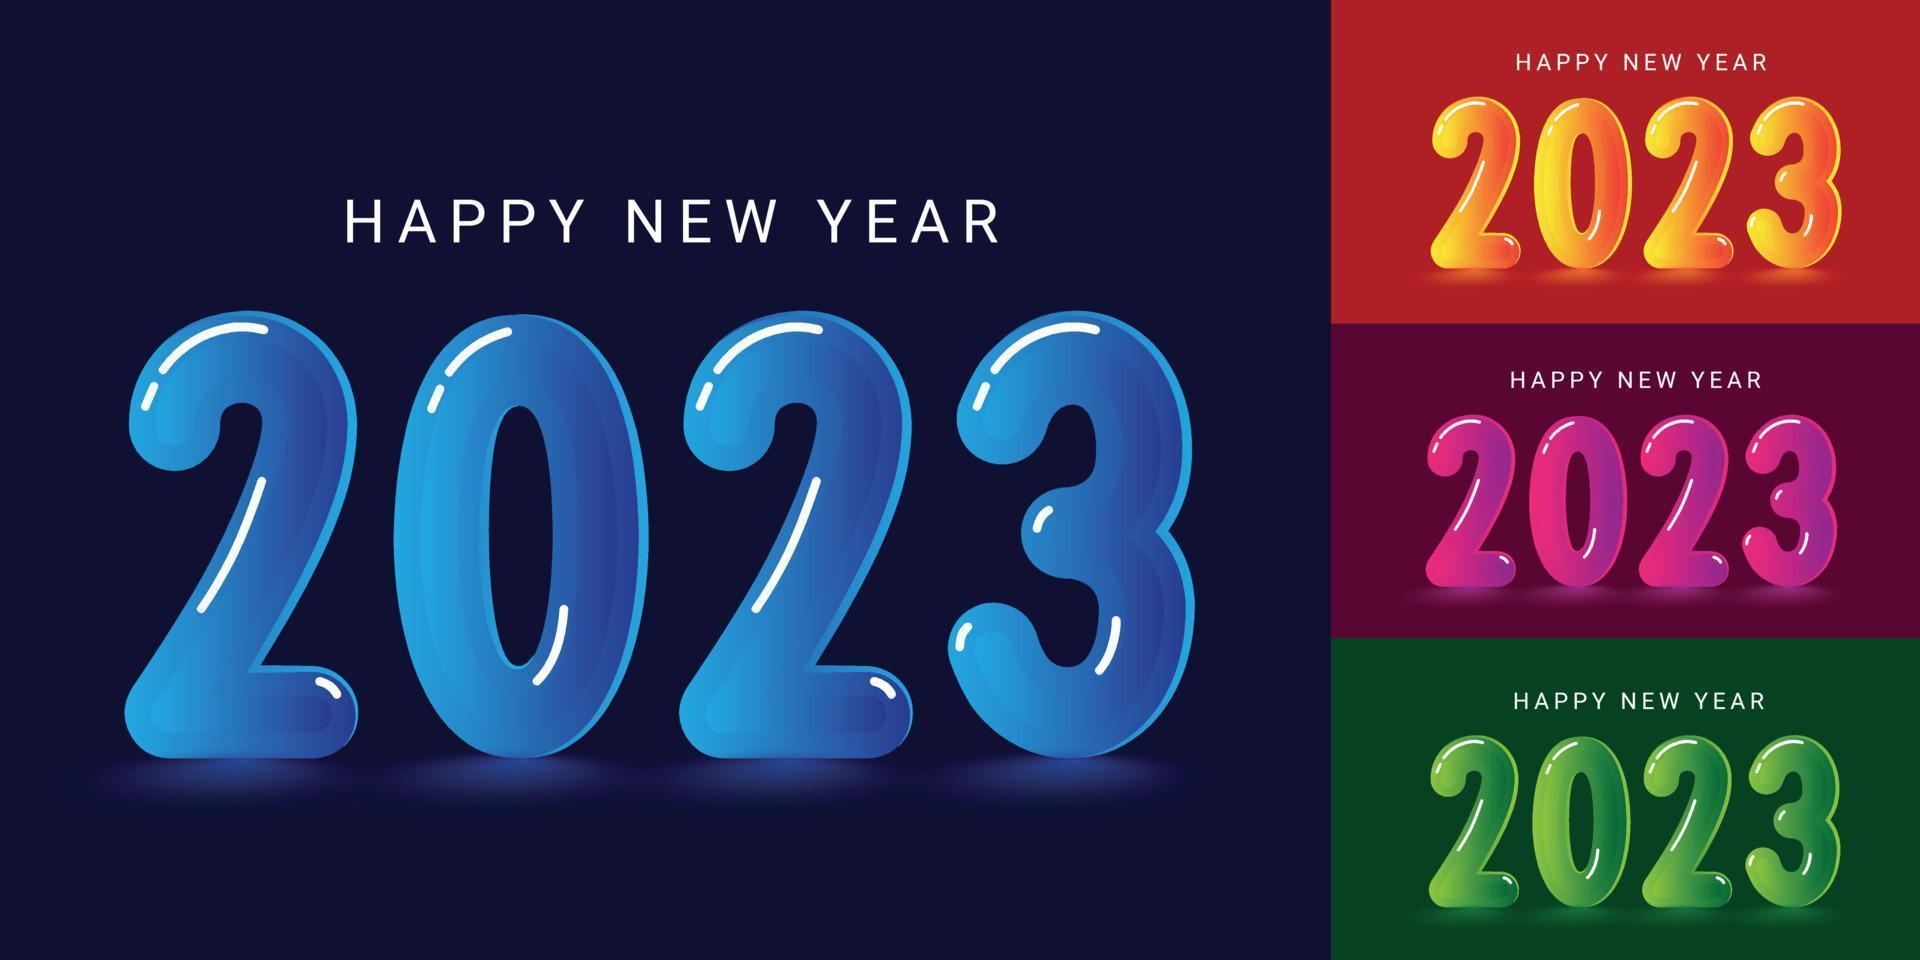 2023 Happy new year cute watercolor text word invitation card design for social media header vector